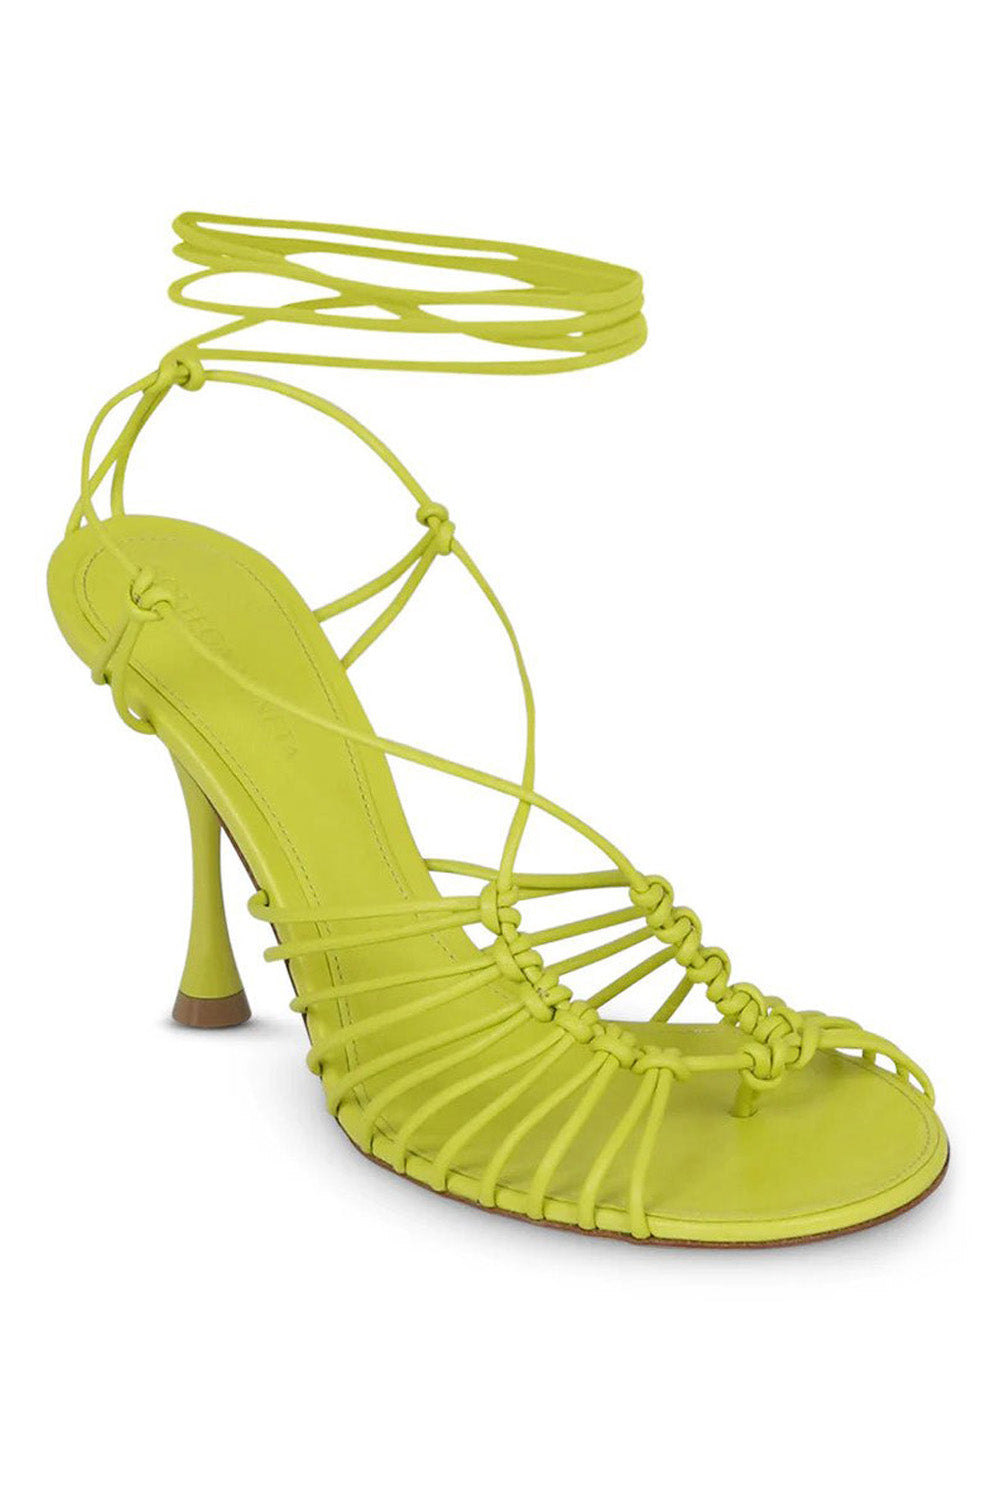 Bottega Veneta® Women's Stretch Lace-Up Sandal in Grass. Shop